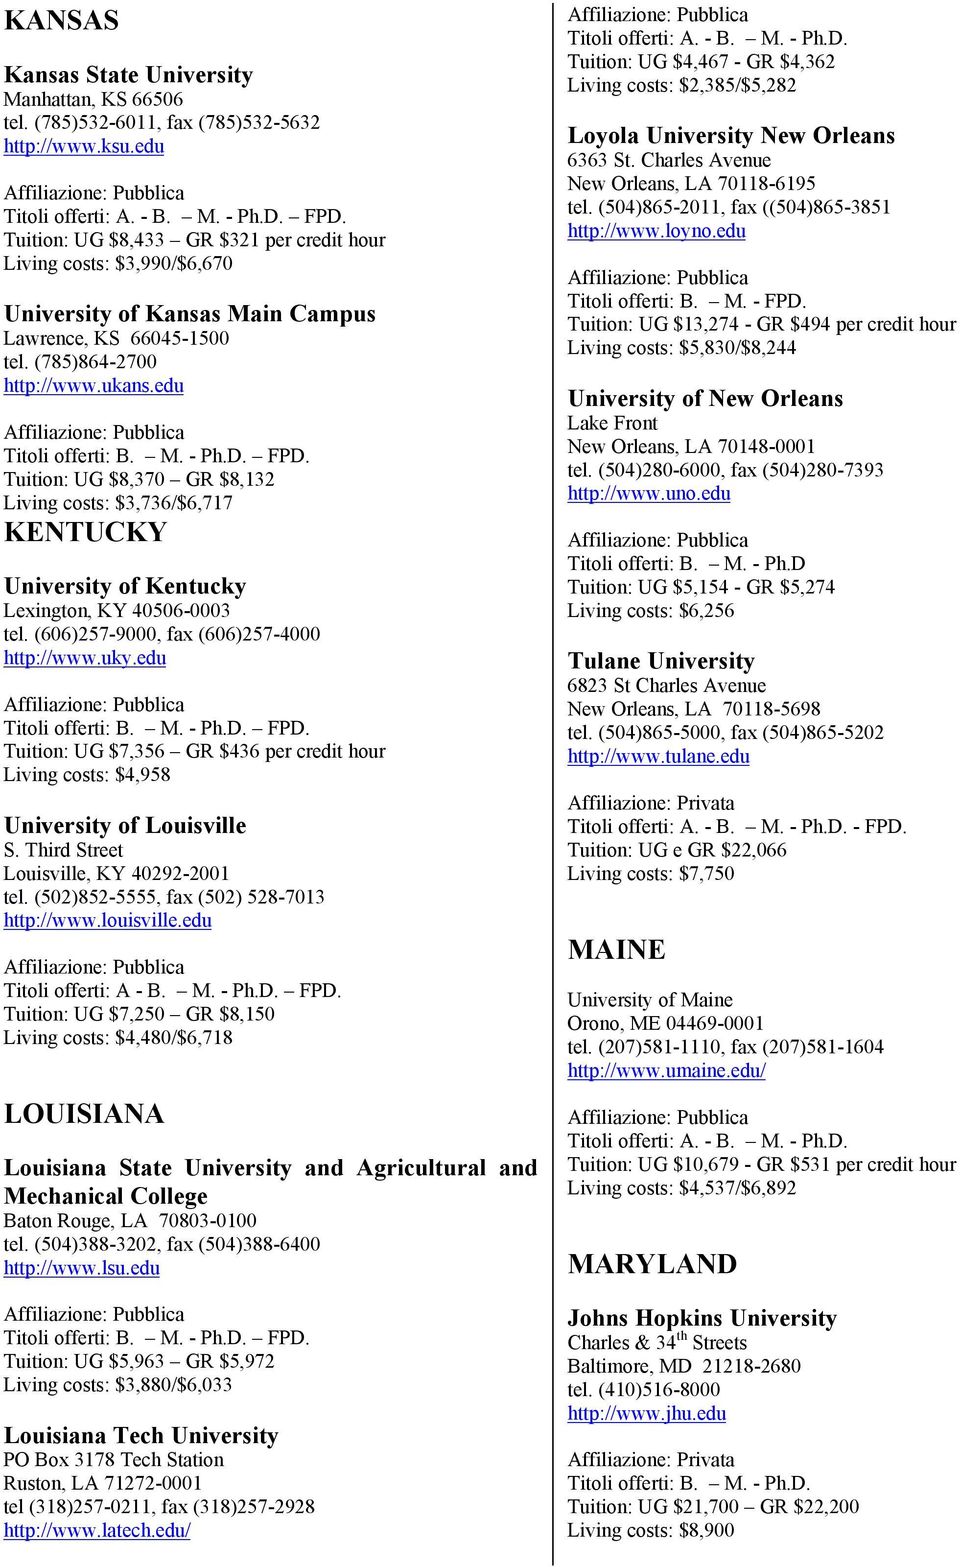 Tuition: UG $8,370 GR $8,132 Living costs: $3,736/$6,717 KENTUCKY University of Kentucky Lexington, KY 40506-0003 tel. (606)257-9000, fax (606)257-4000 http://www.uky.edu.